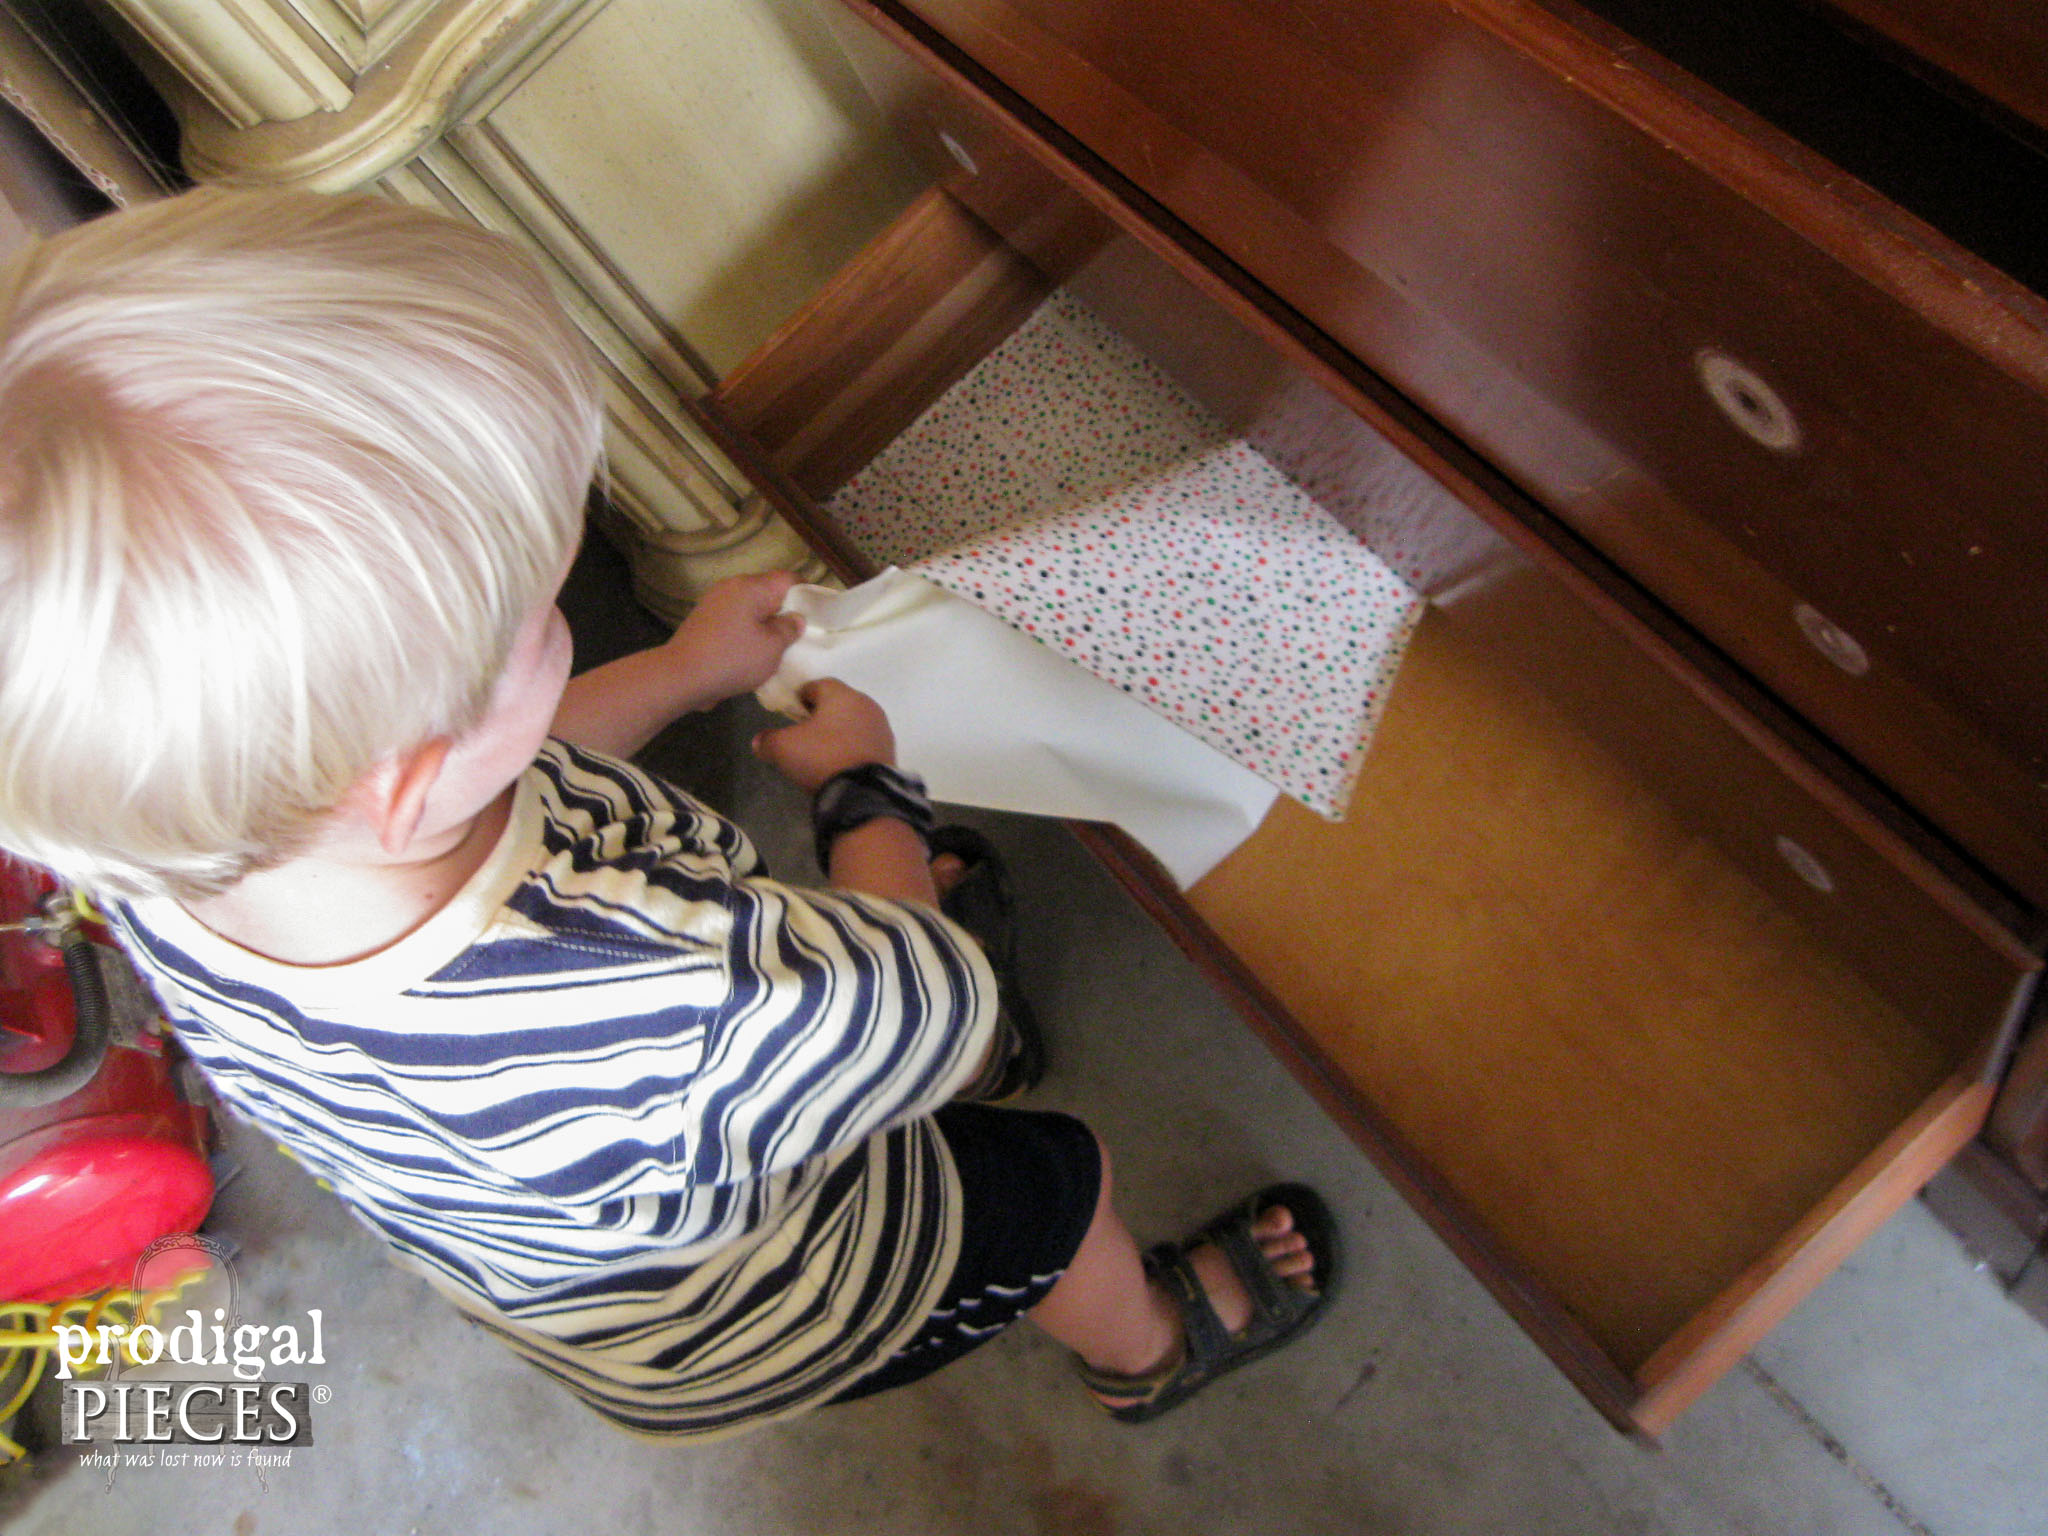 Little Boy Helper with Bedroom Set | Prodigal Pieces | www.prodigalpieces.com